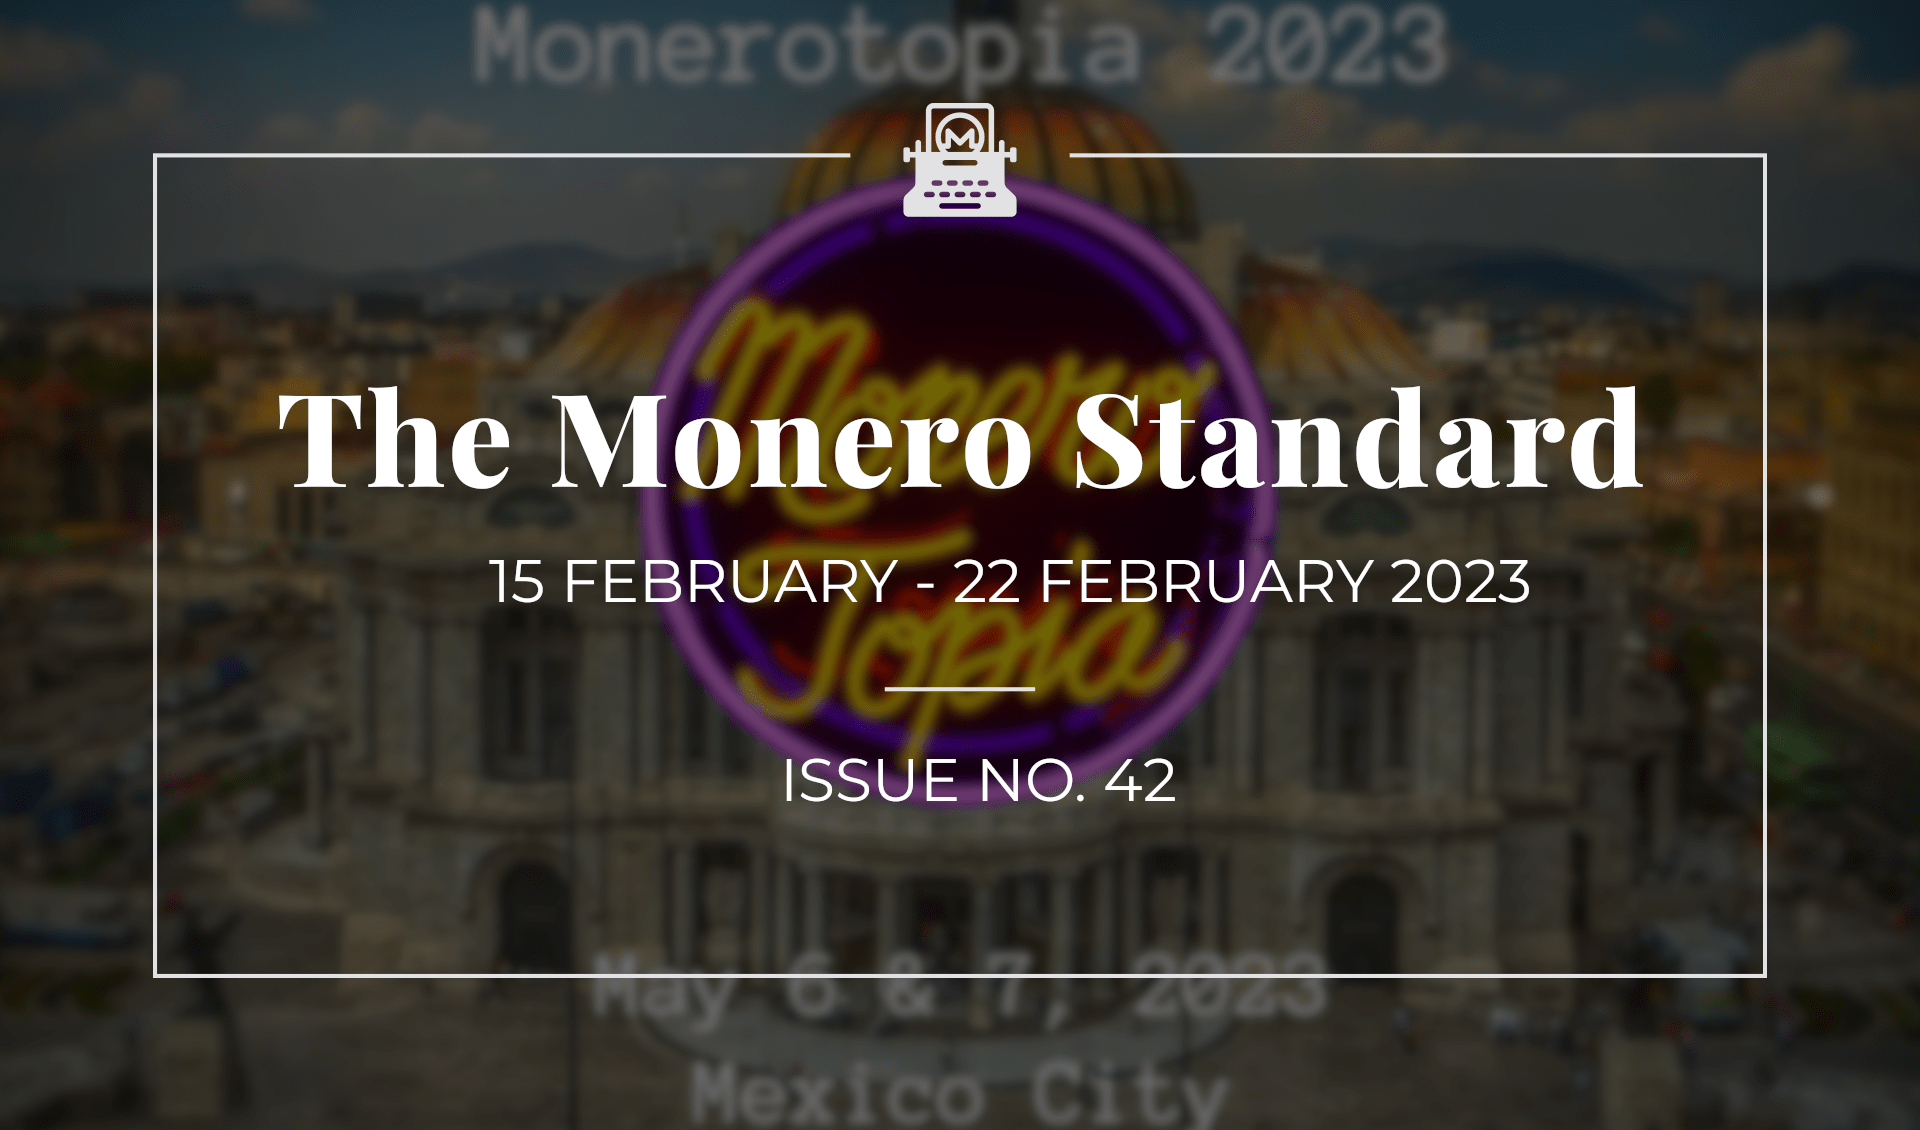 The Monero Standard #42: 15 February 2023 - 22 February 2023